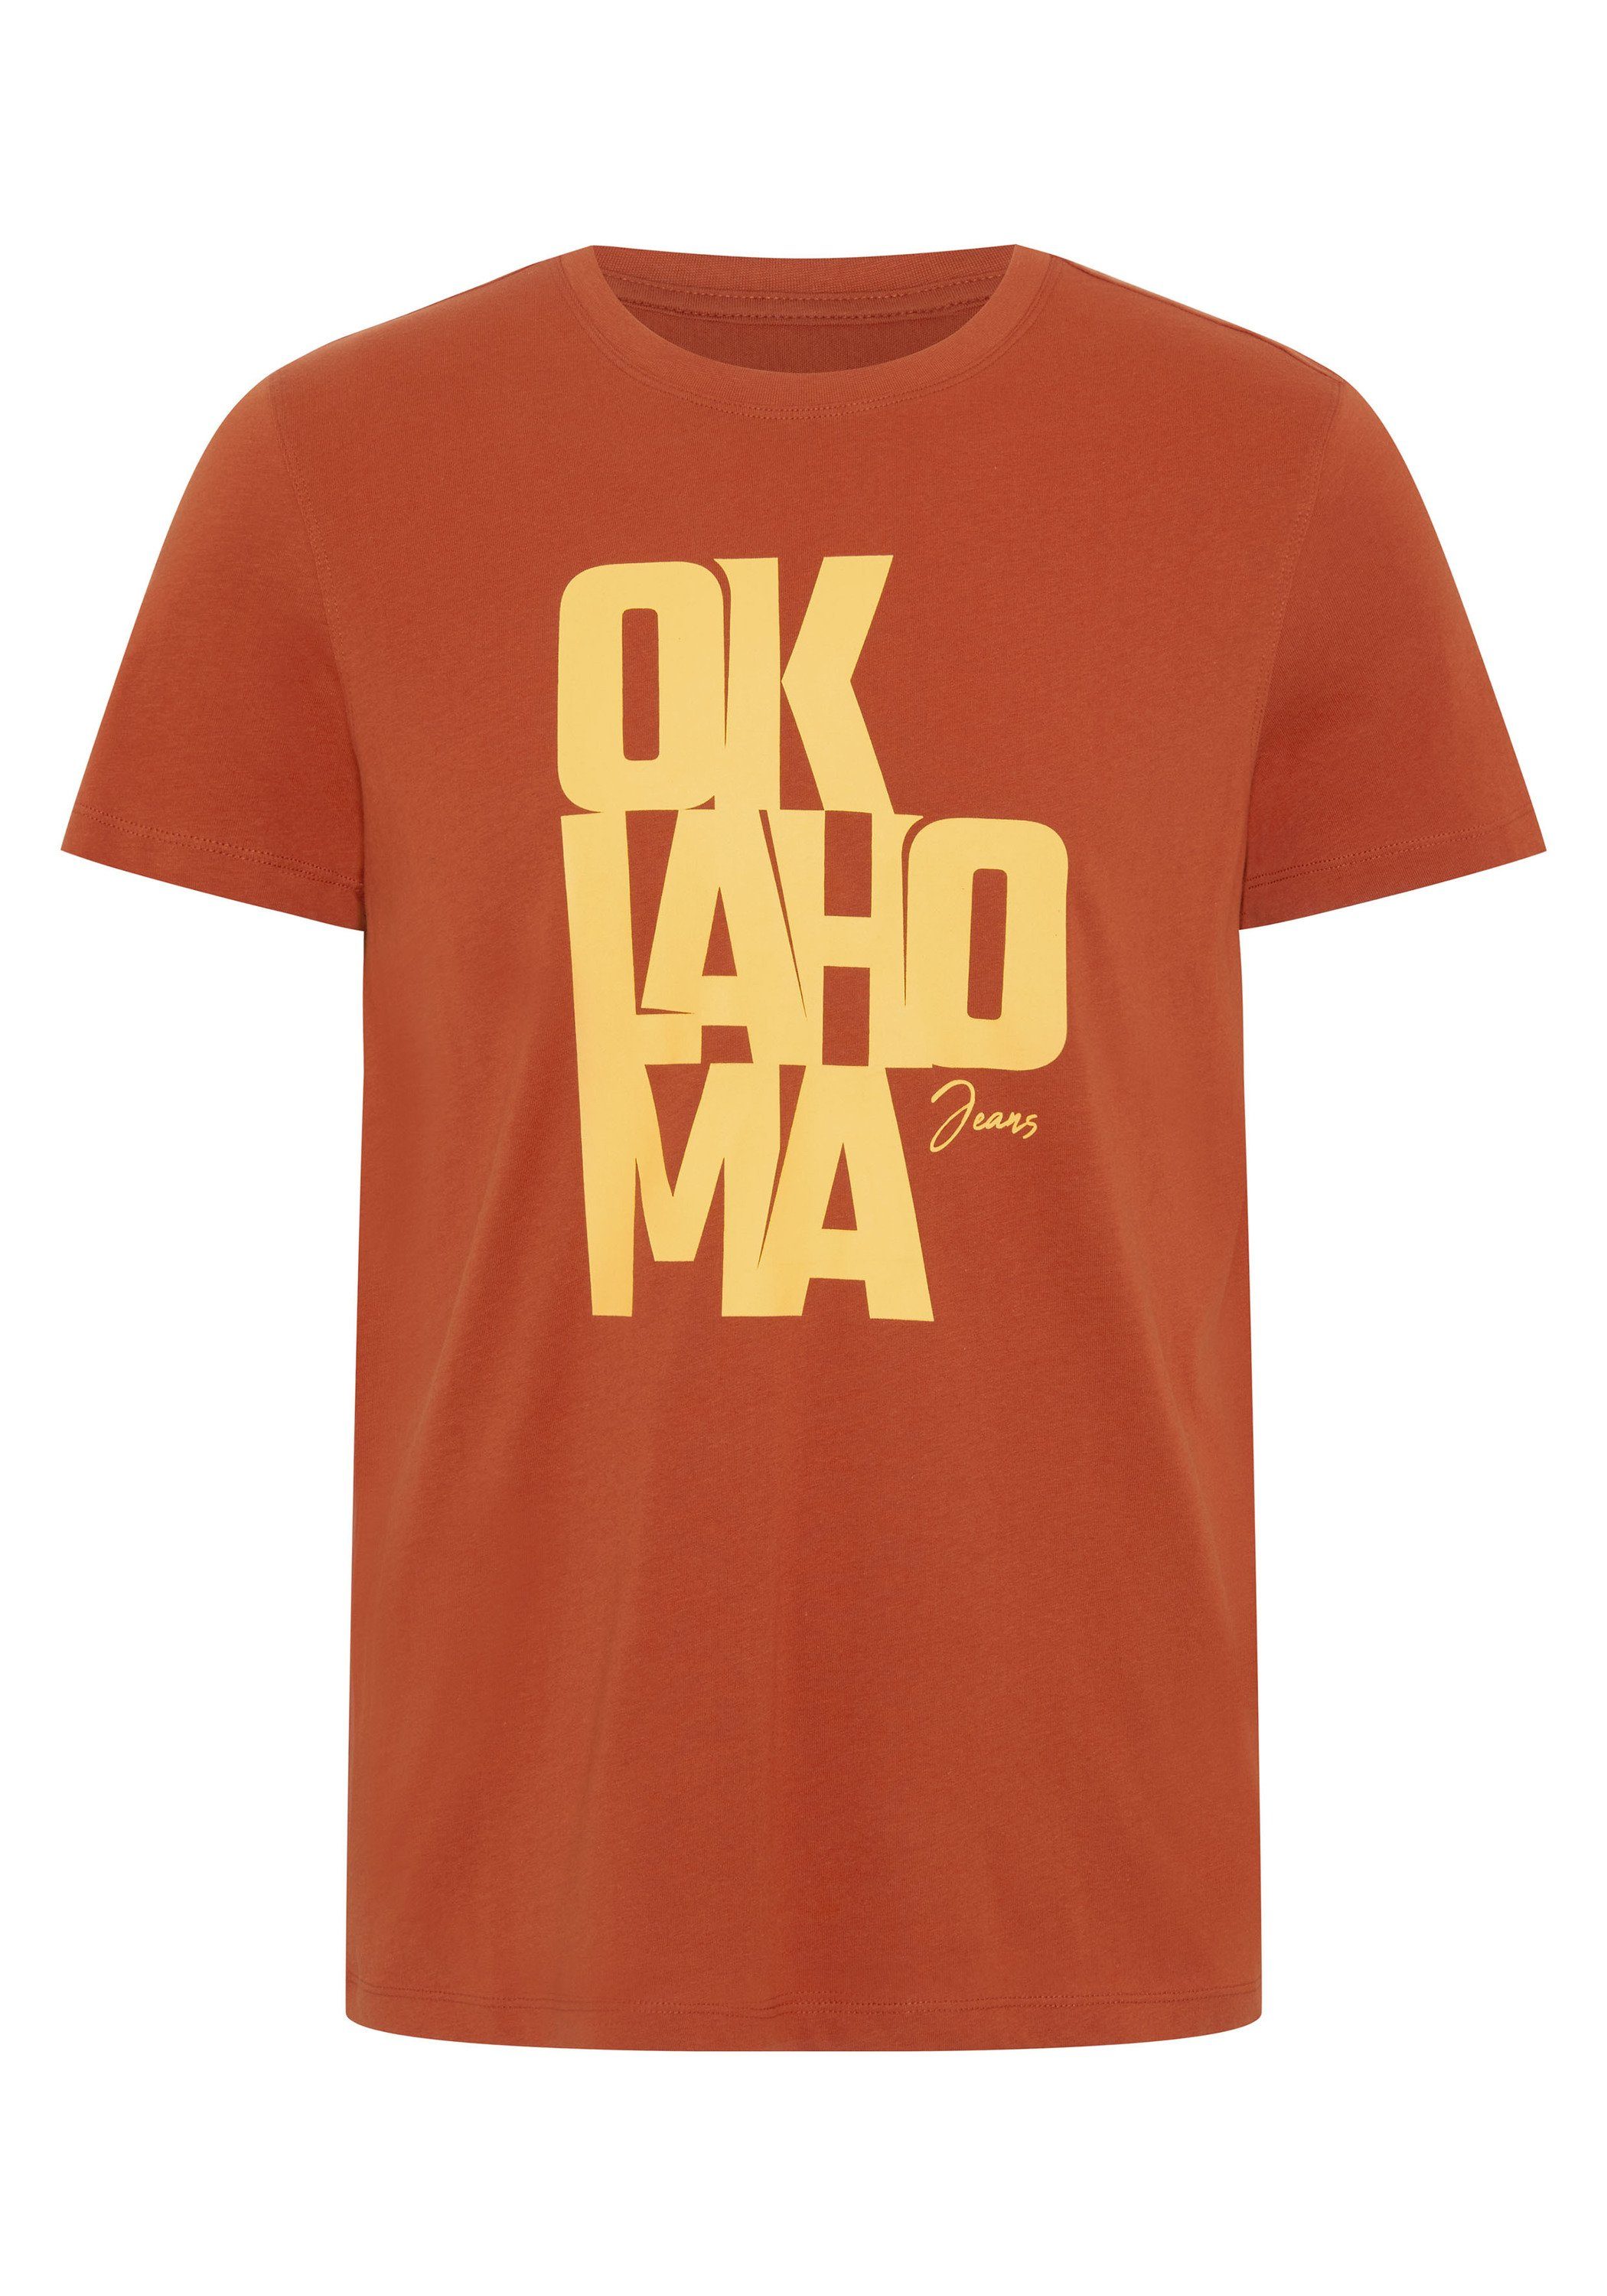 Print-Shirt mit Label-Schriftzug Rooibos Oklahoma Jersey Jeans aus Tea 18-1355